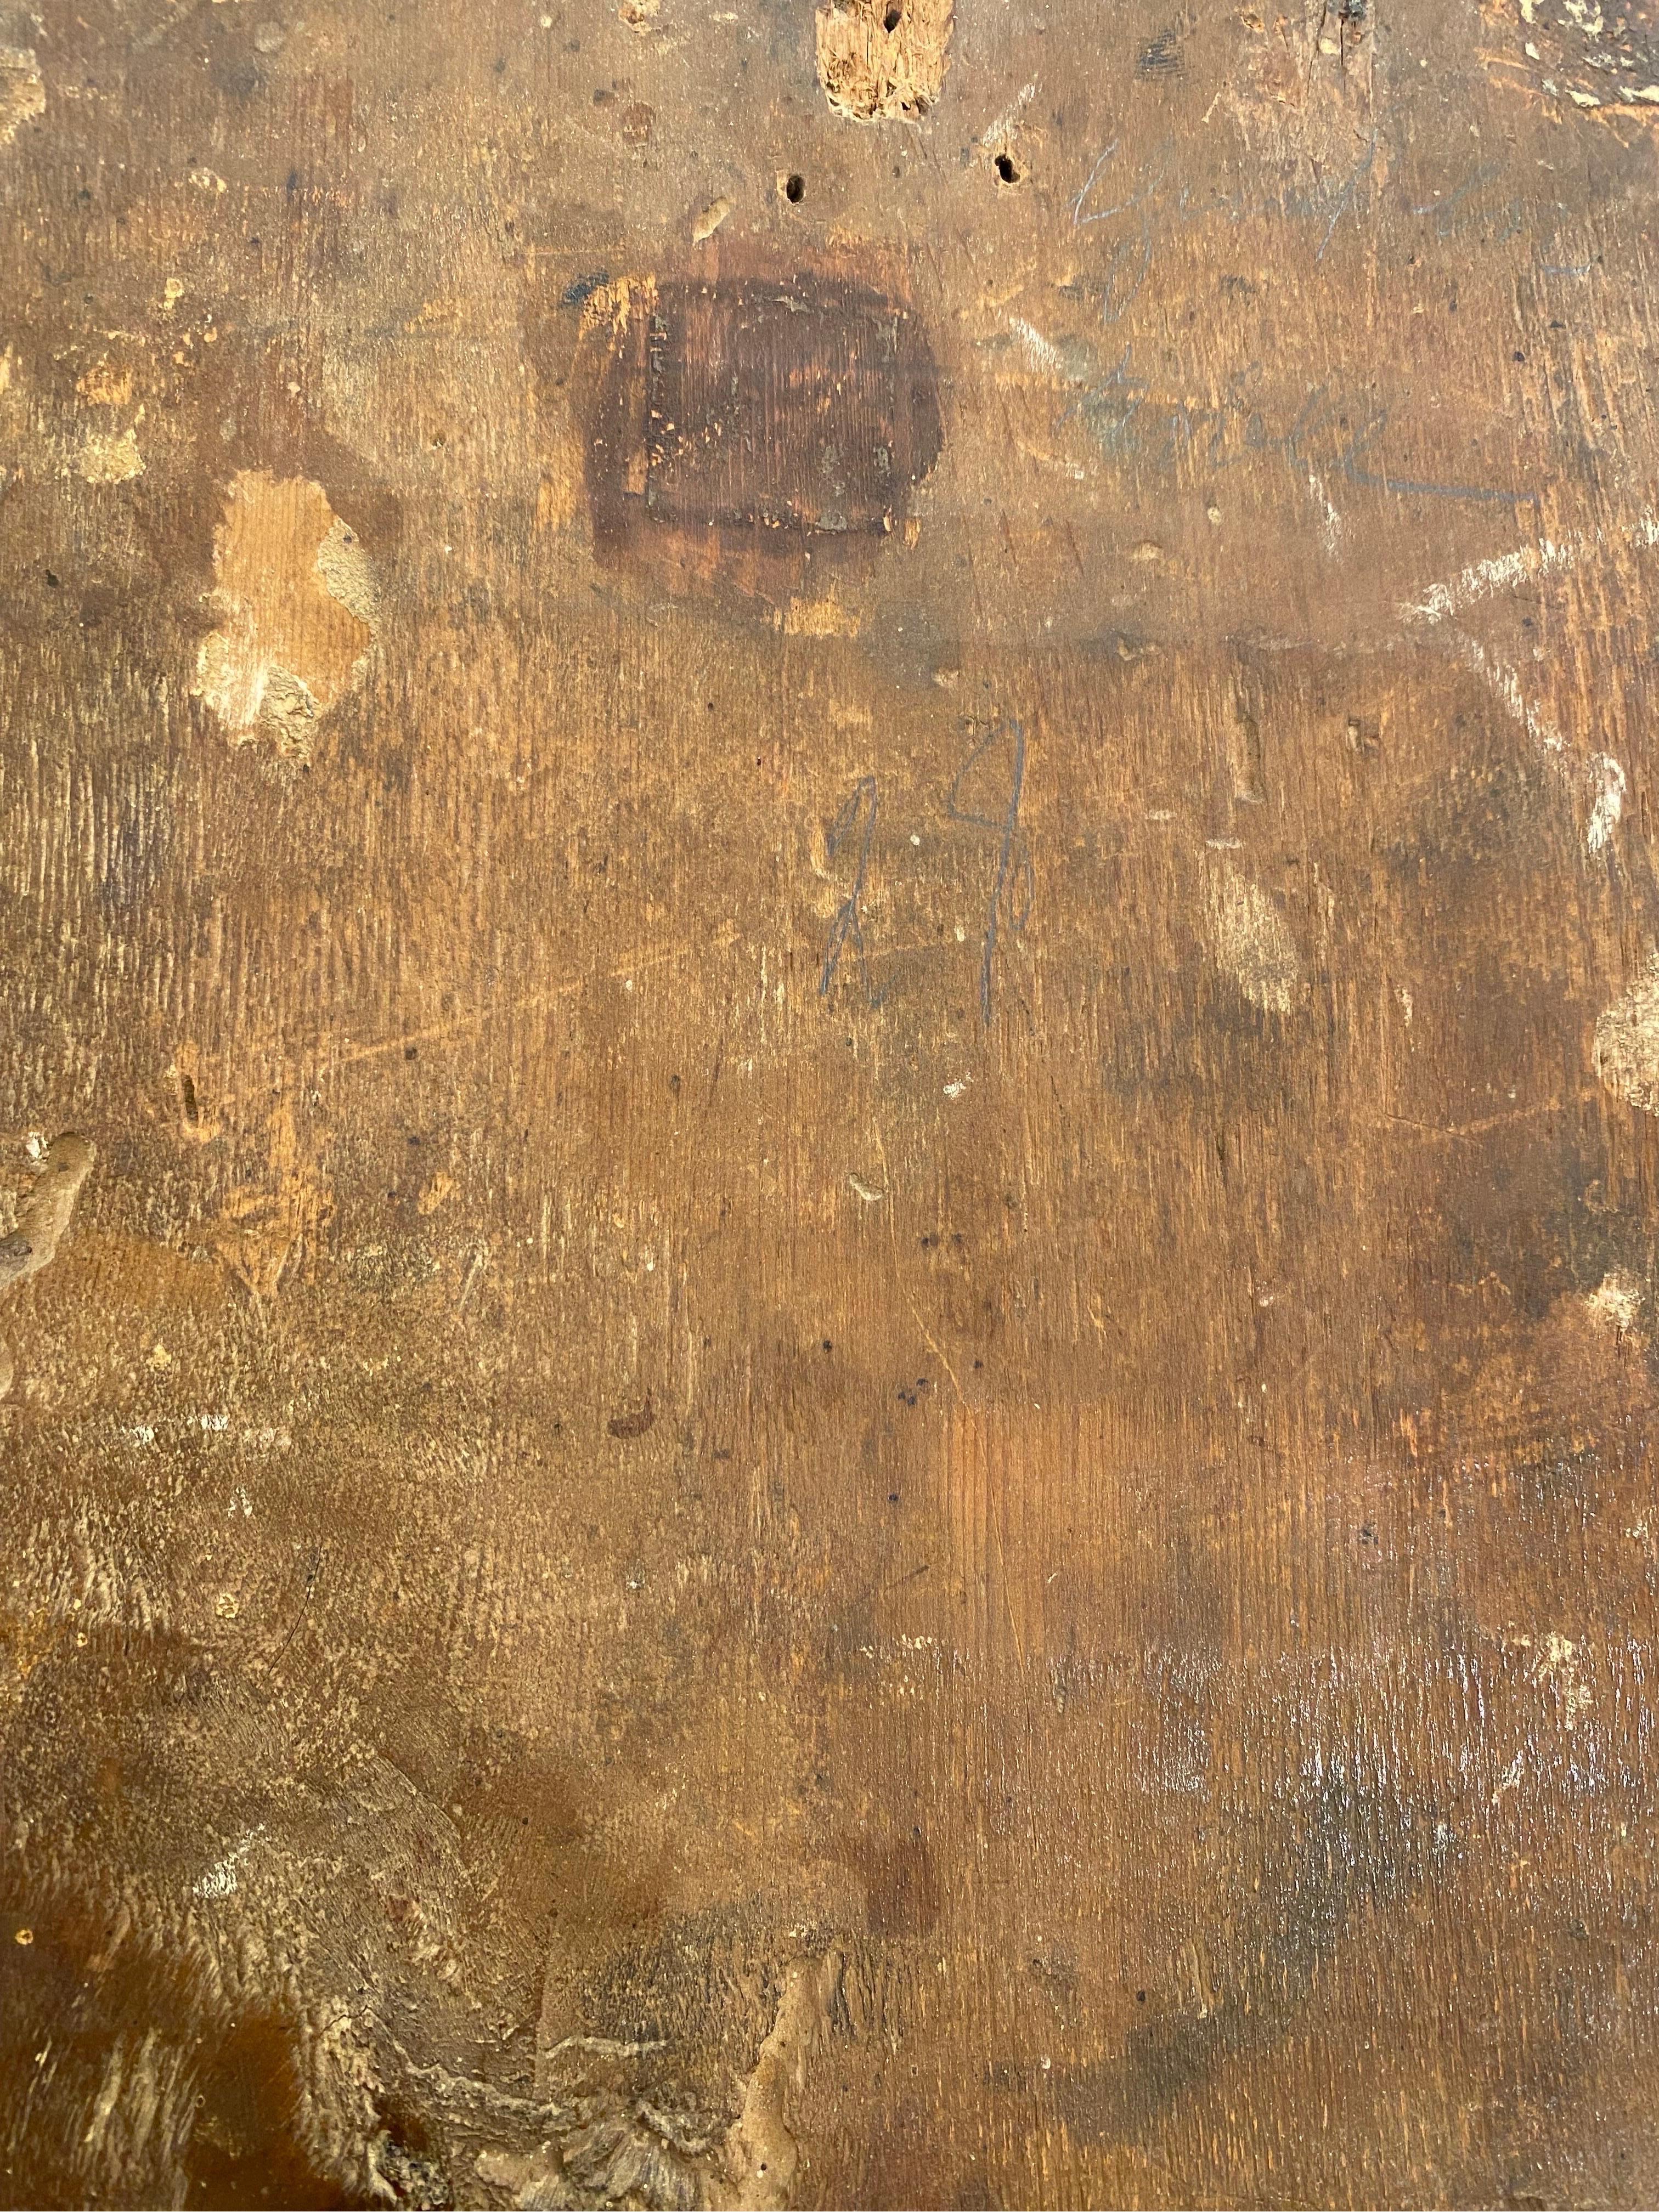 Venetian oil on panel end of 15 century 